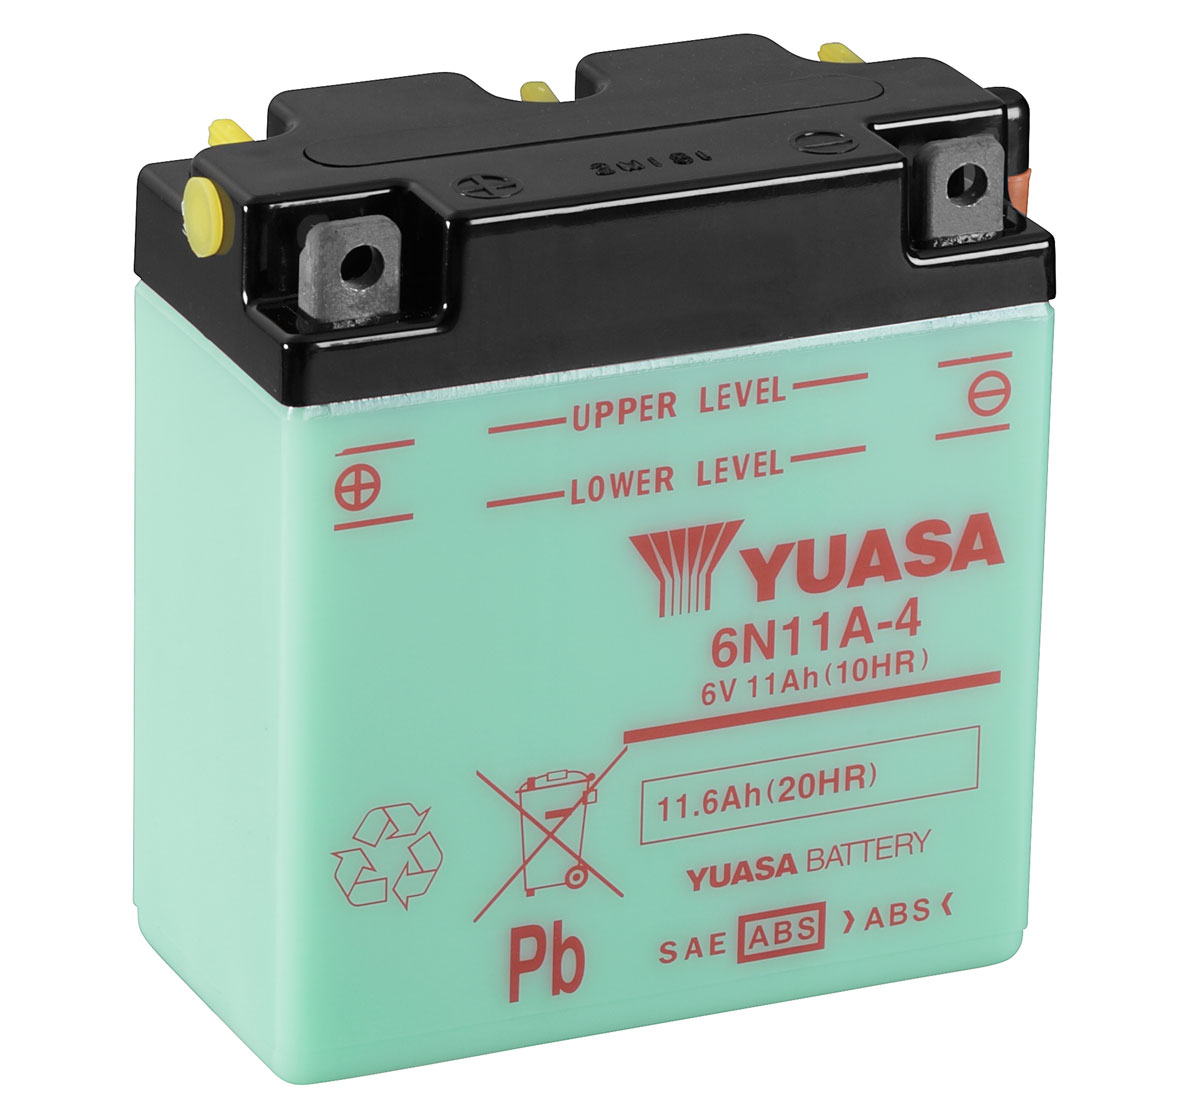 Yuasa 6N11A-4 6V Motorcycle Battery